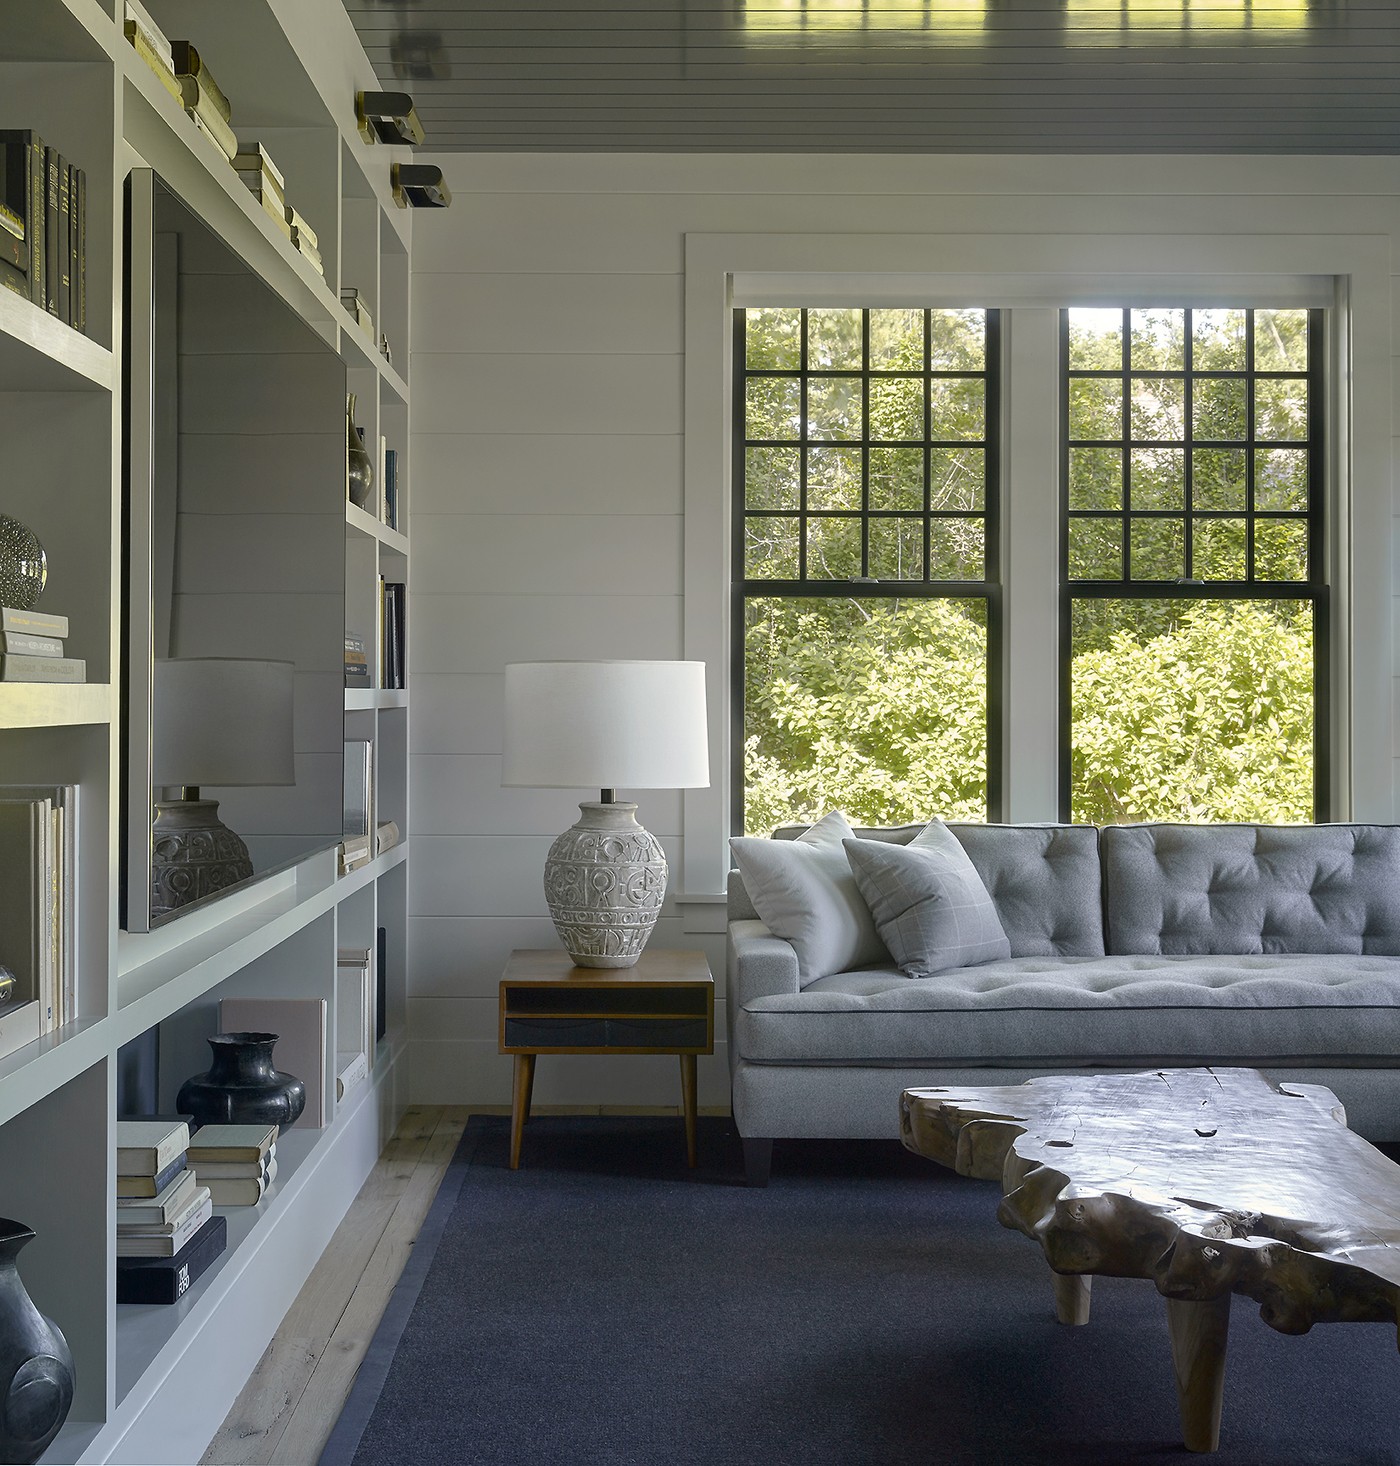 Décor do dia: sala de estar com estilo provençal e tons de cinza (Foto: Peter Murdock)